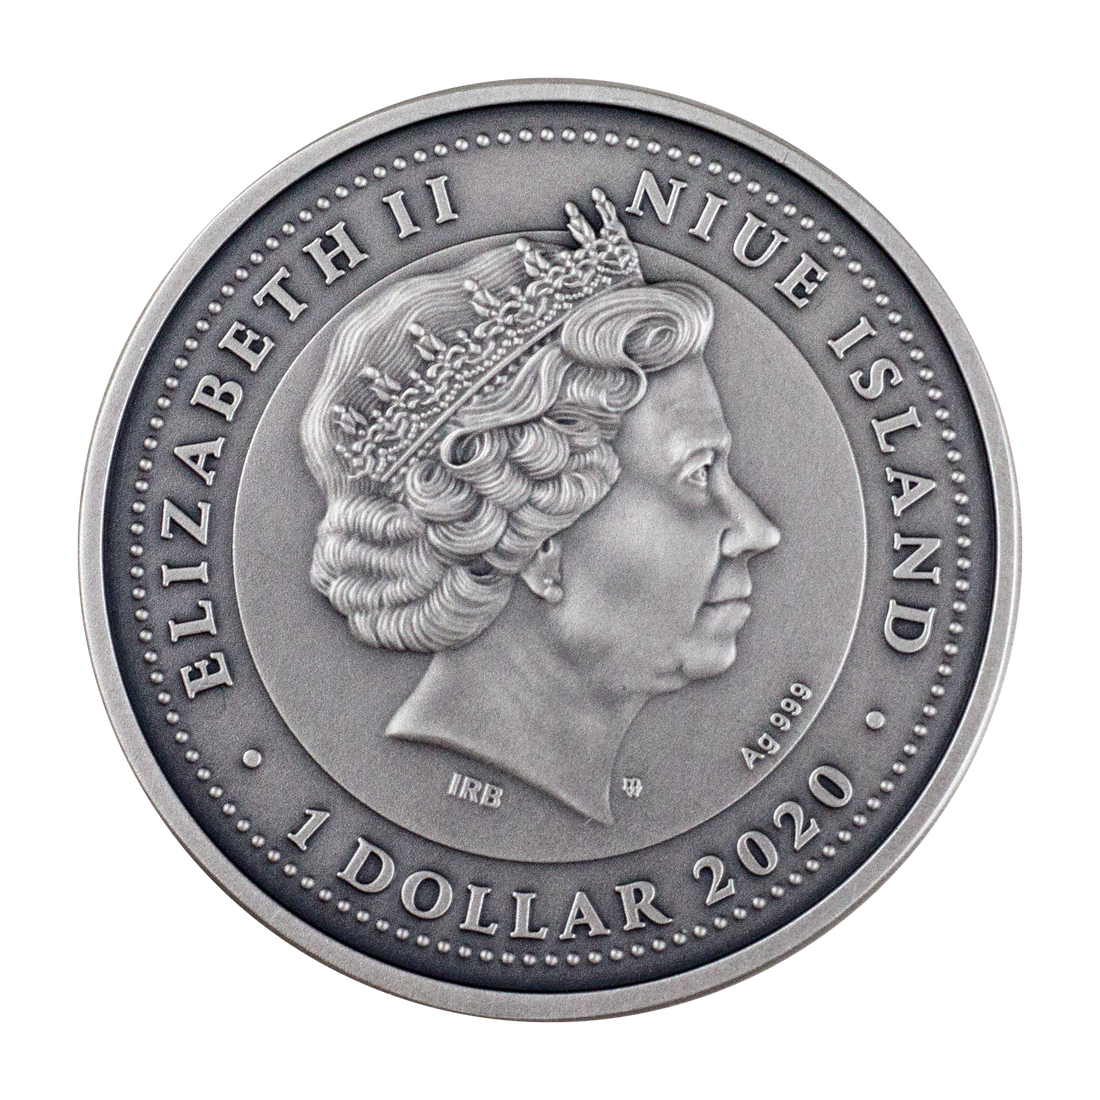 2020 Niue AQUARIUS - ZODIAC SIGNS 1 oz Silver Coin - OZB